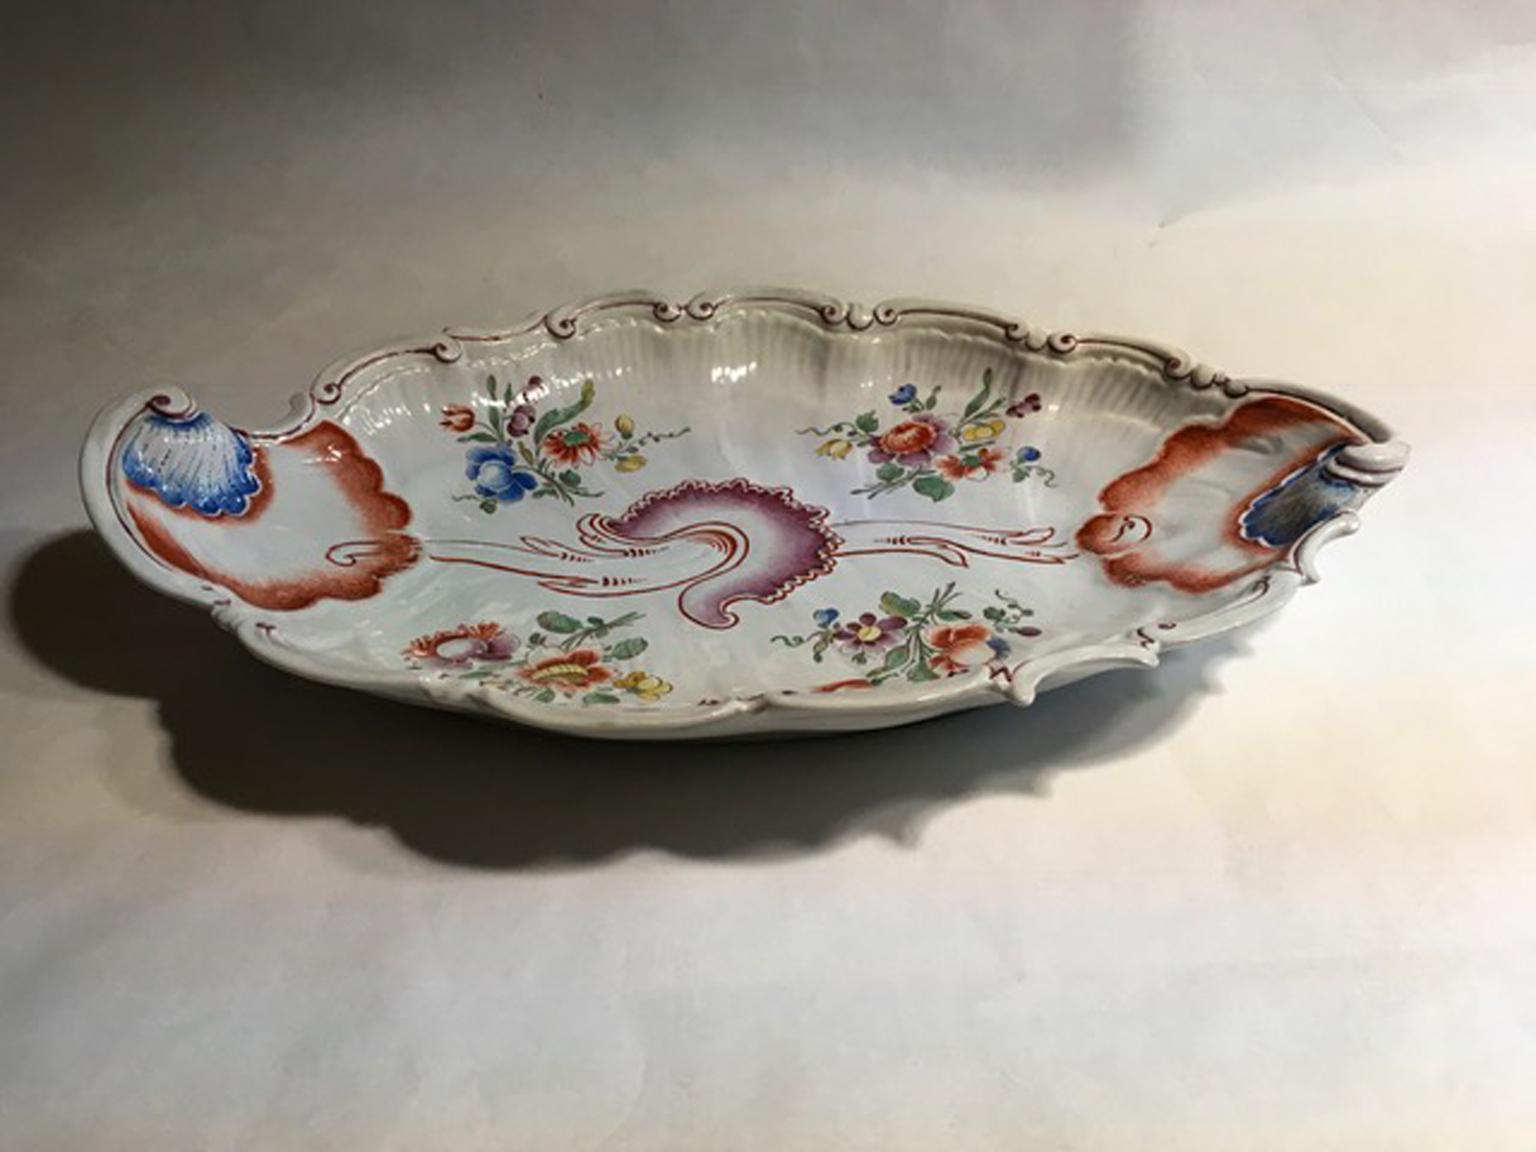 Italy Richard Ginori 1750 Porcelain Bowl For Sale 2